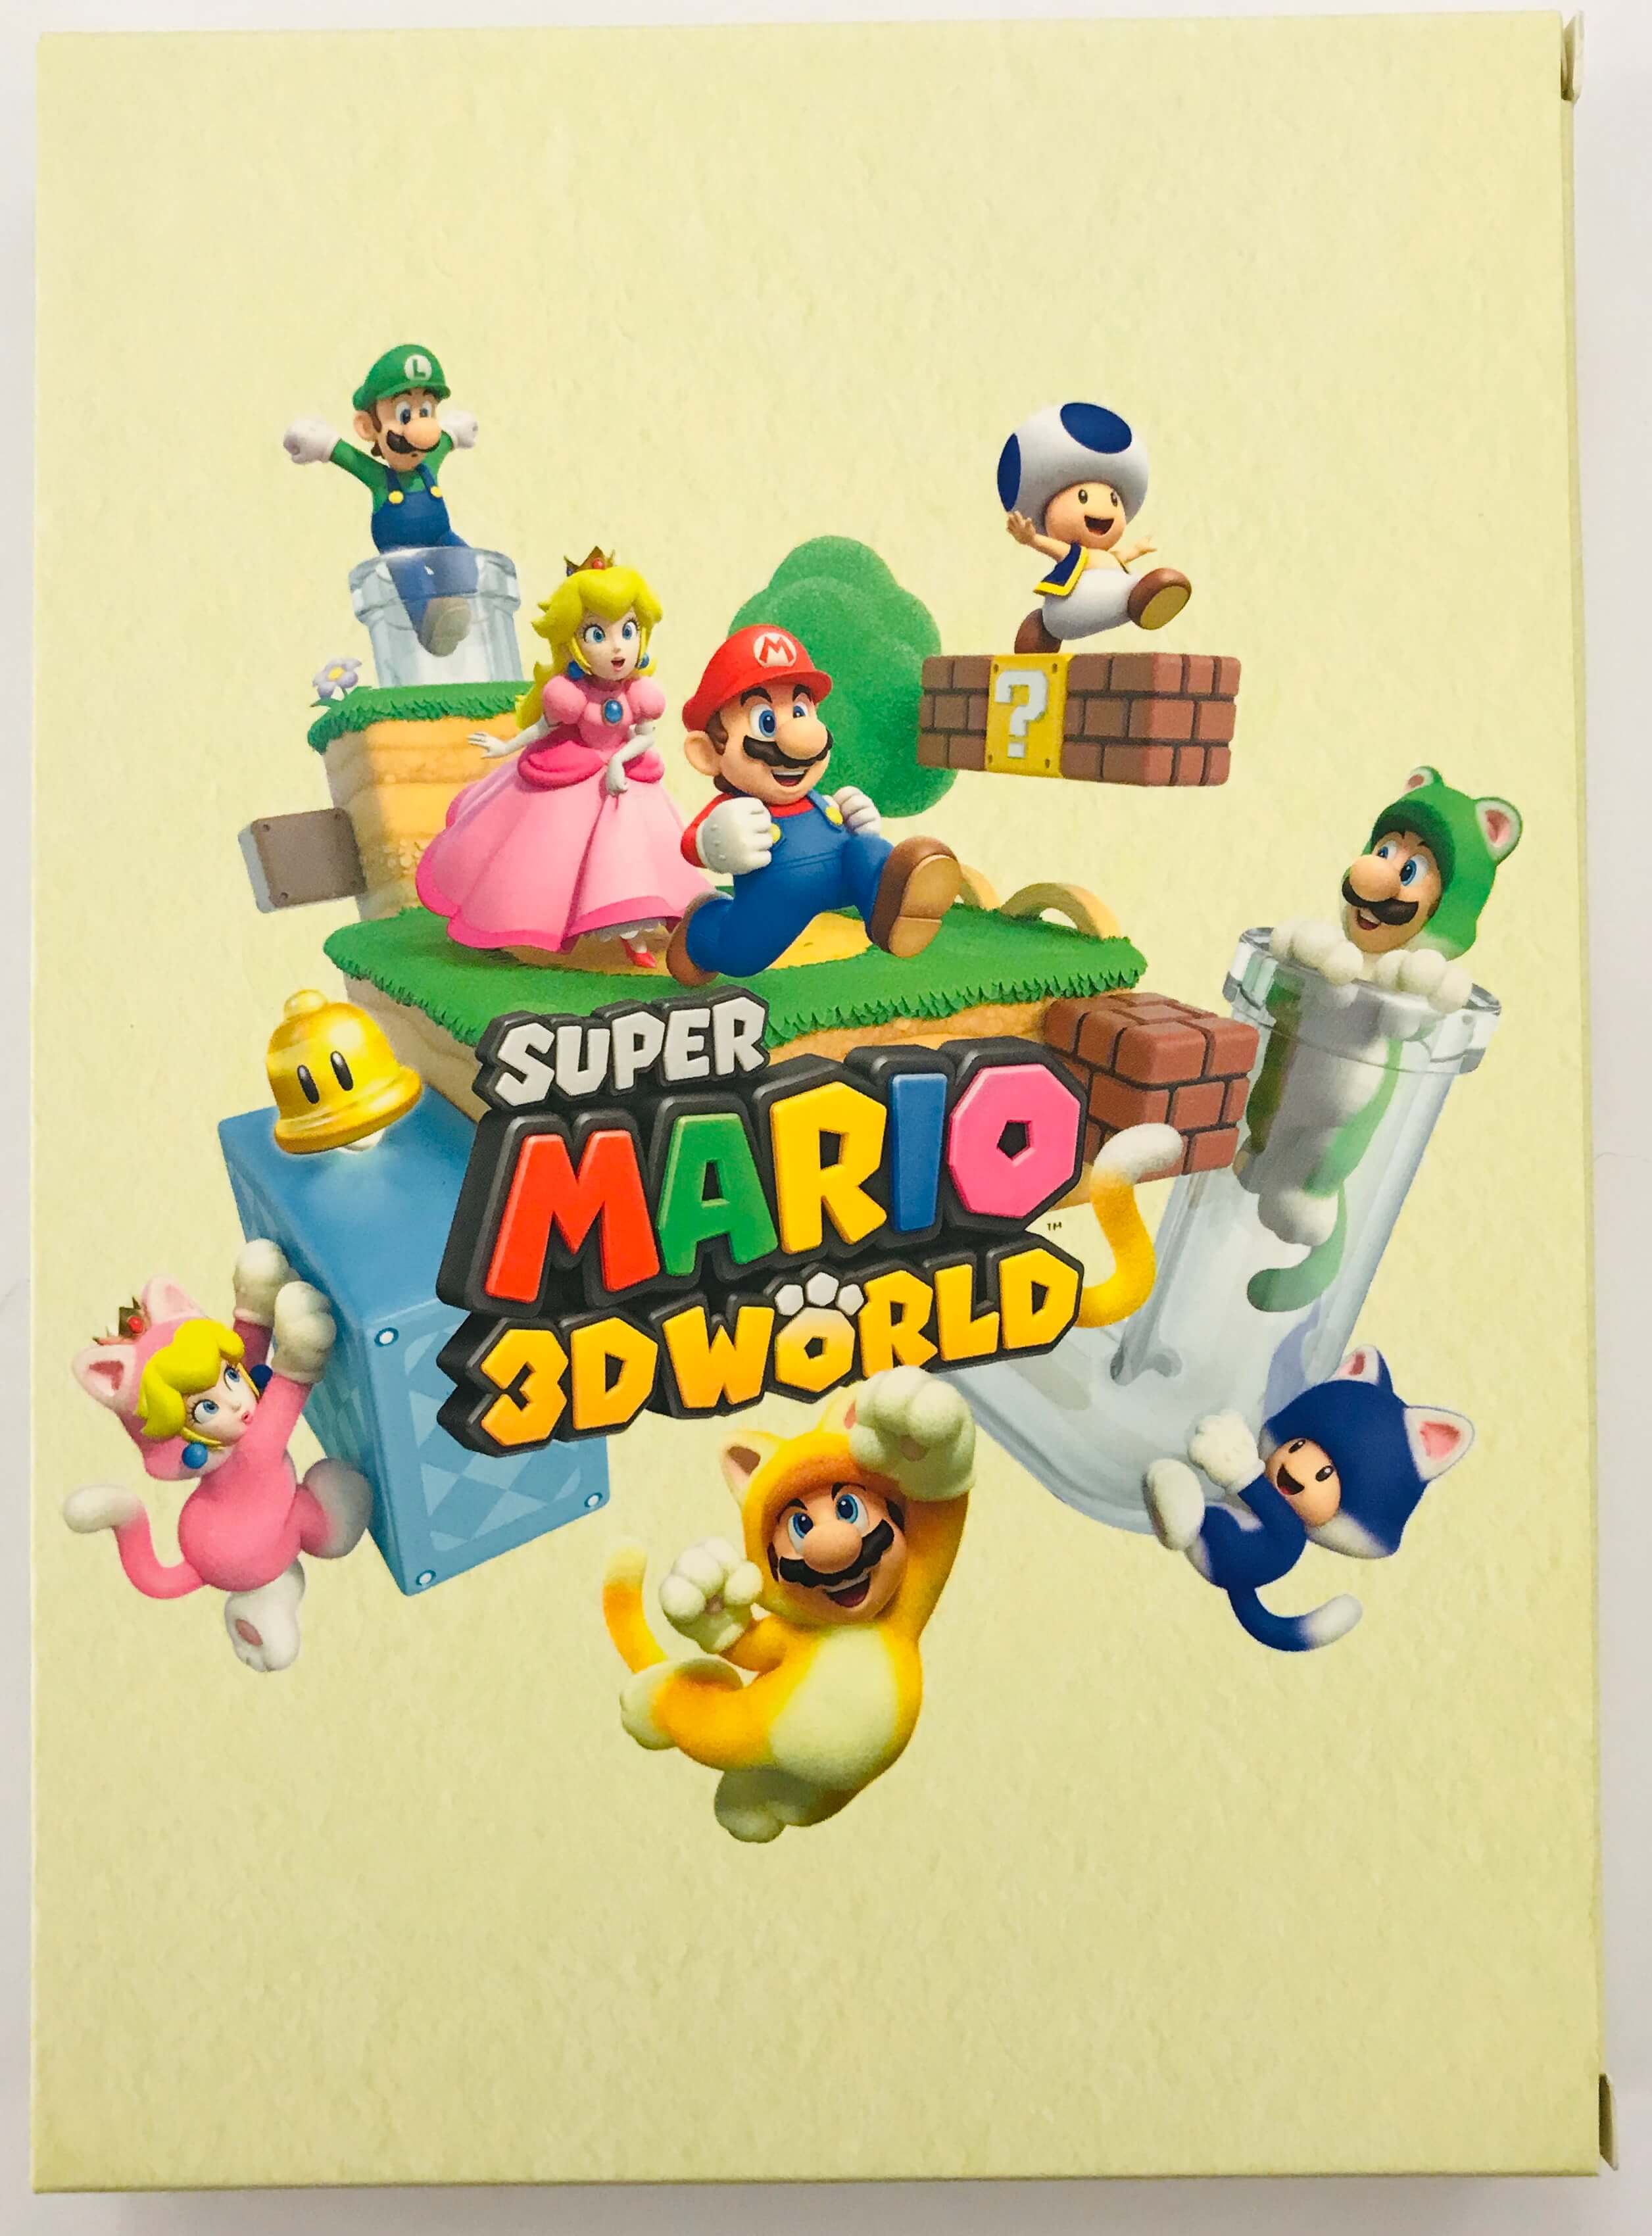 play super mario 3d world online game